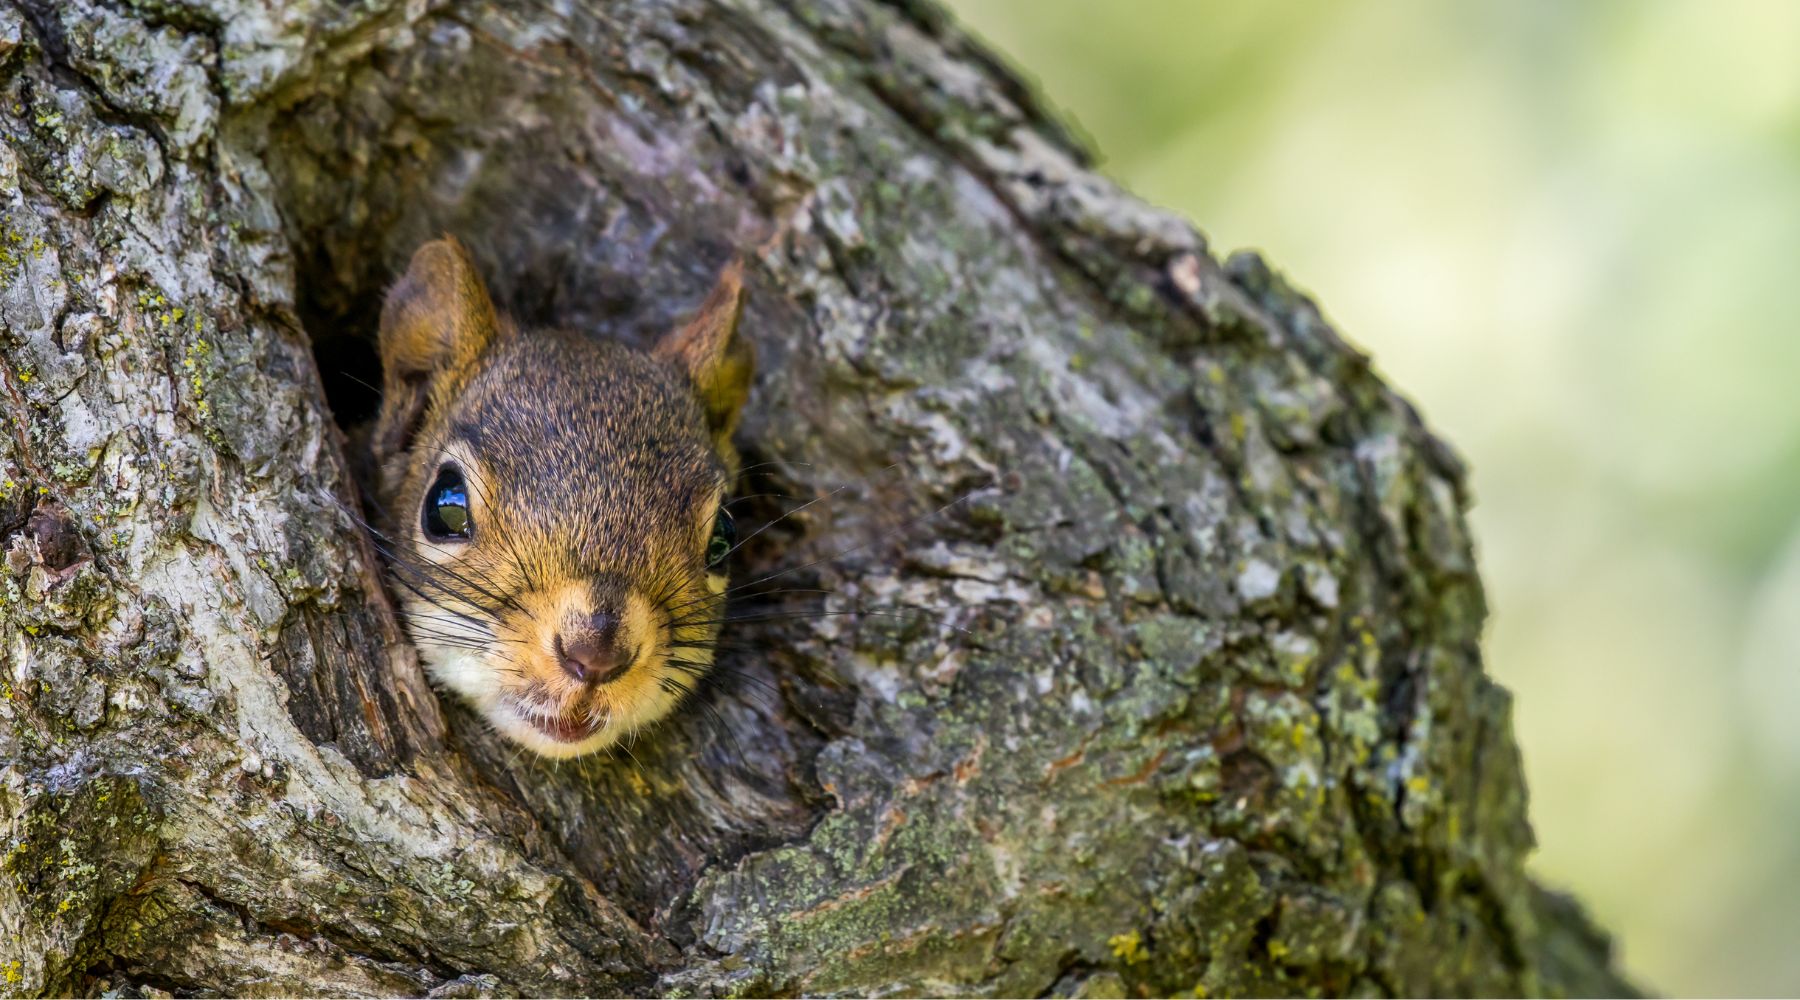 Squirrel inside tree cavity